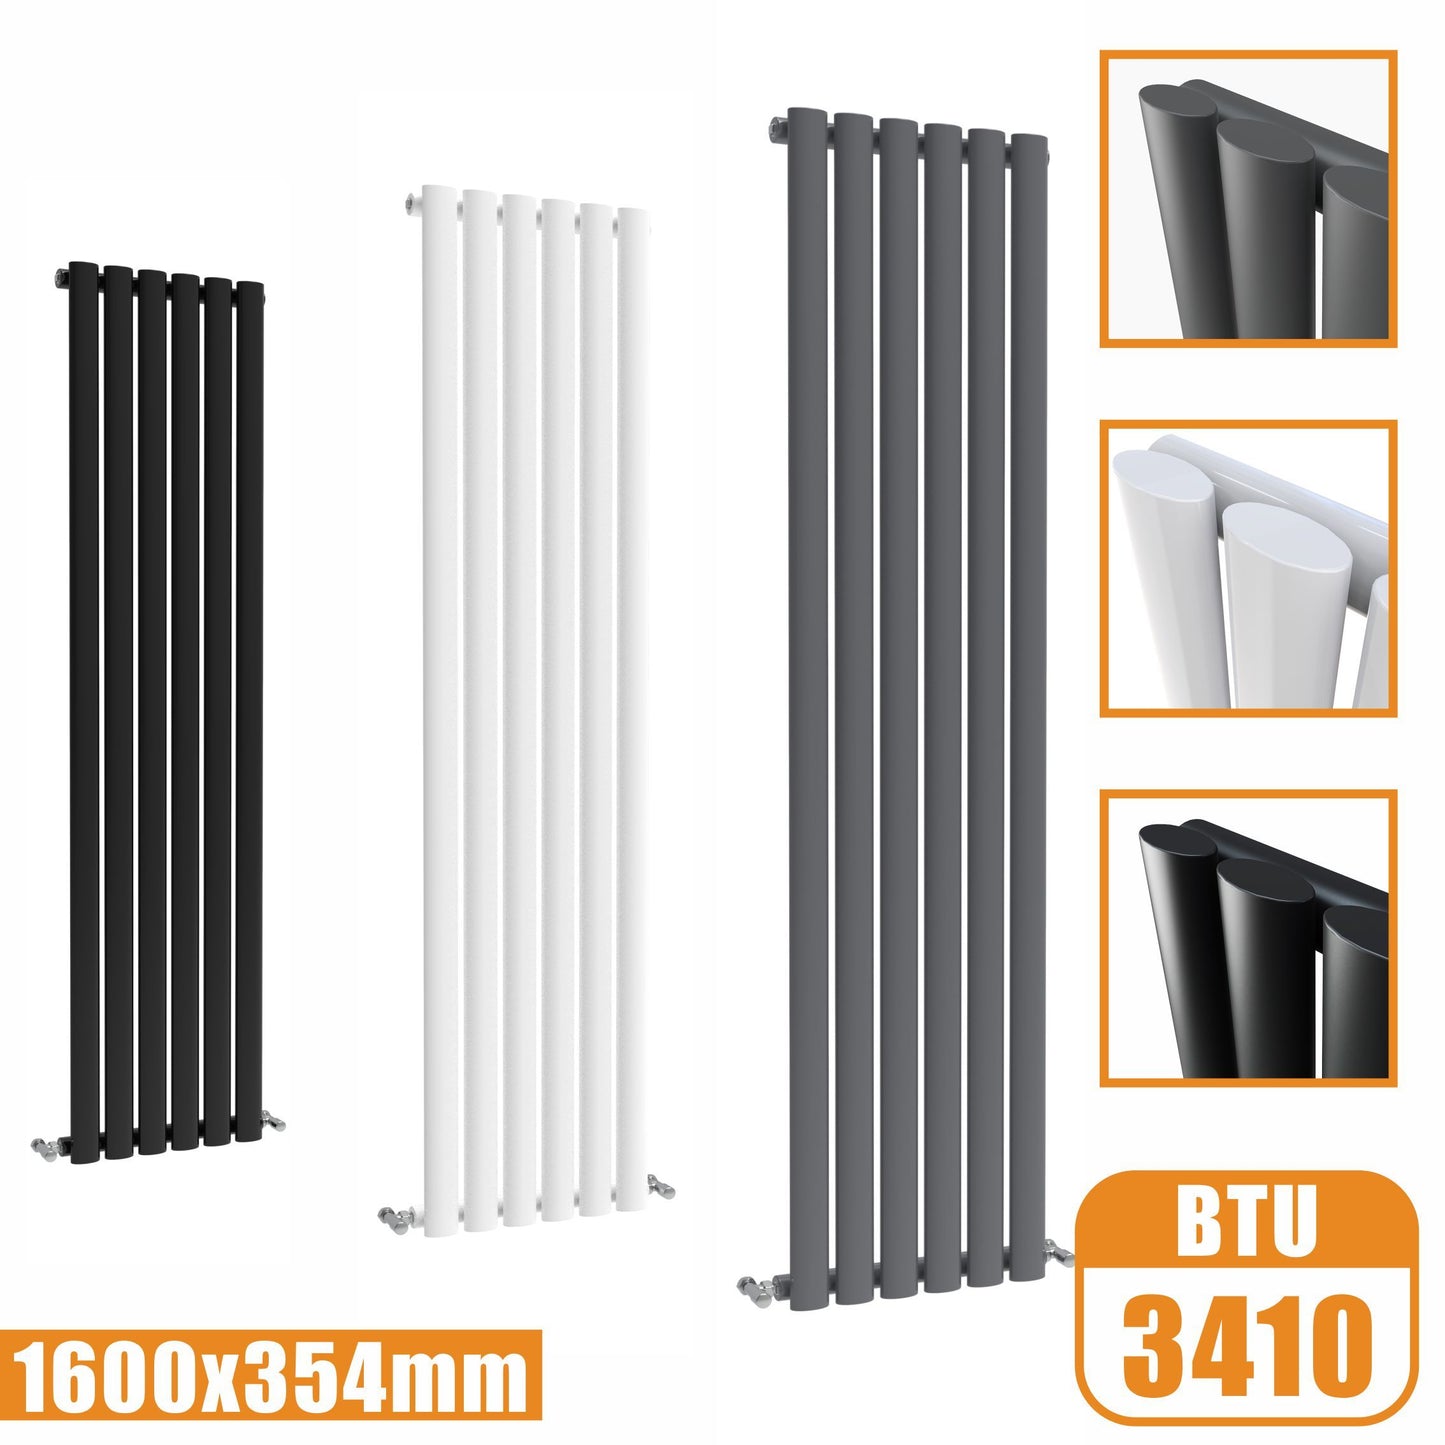 1600x354 vertical,oval column,radiators AICA rads